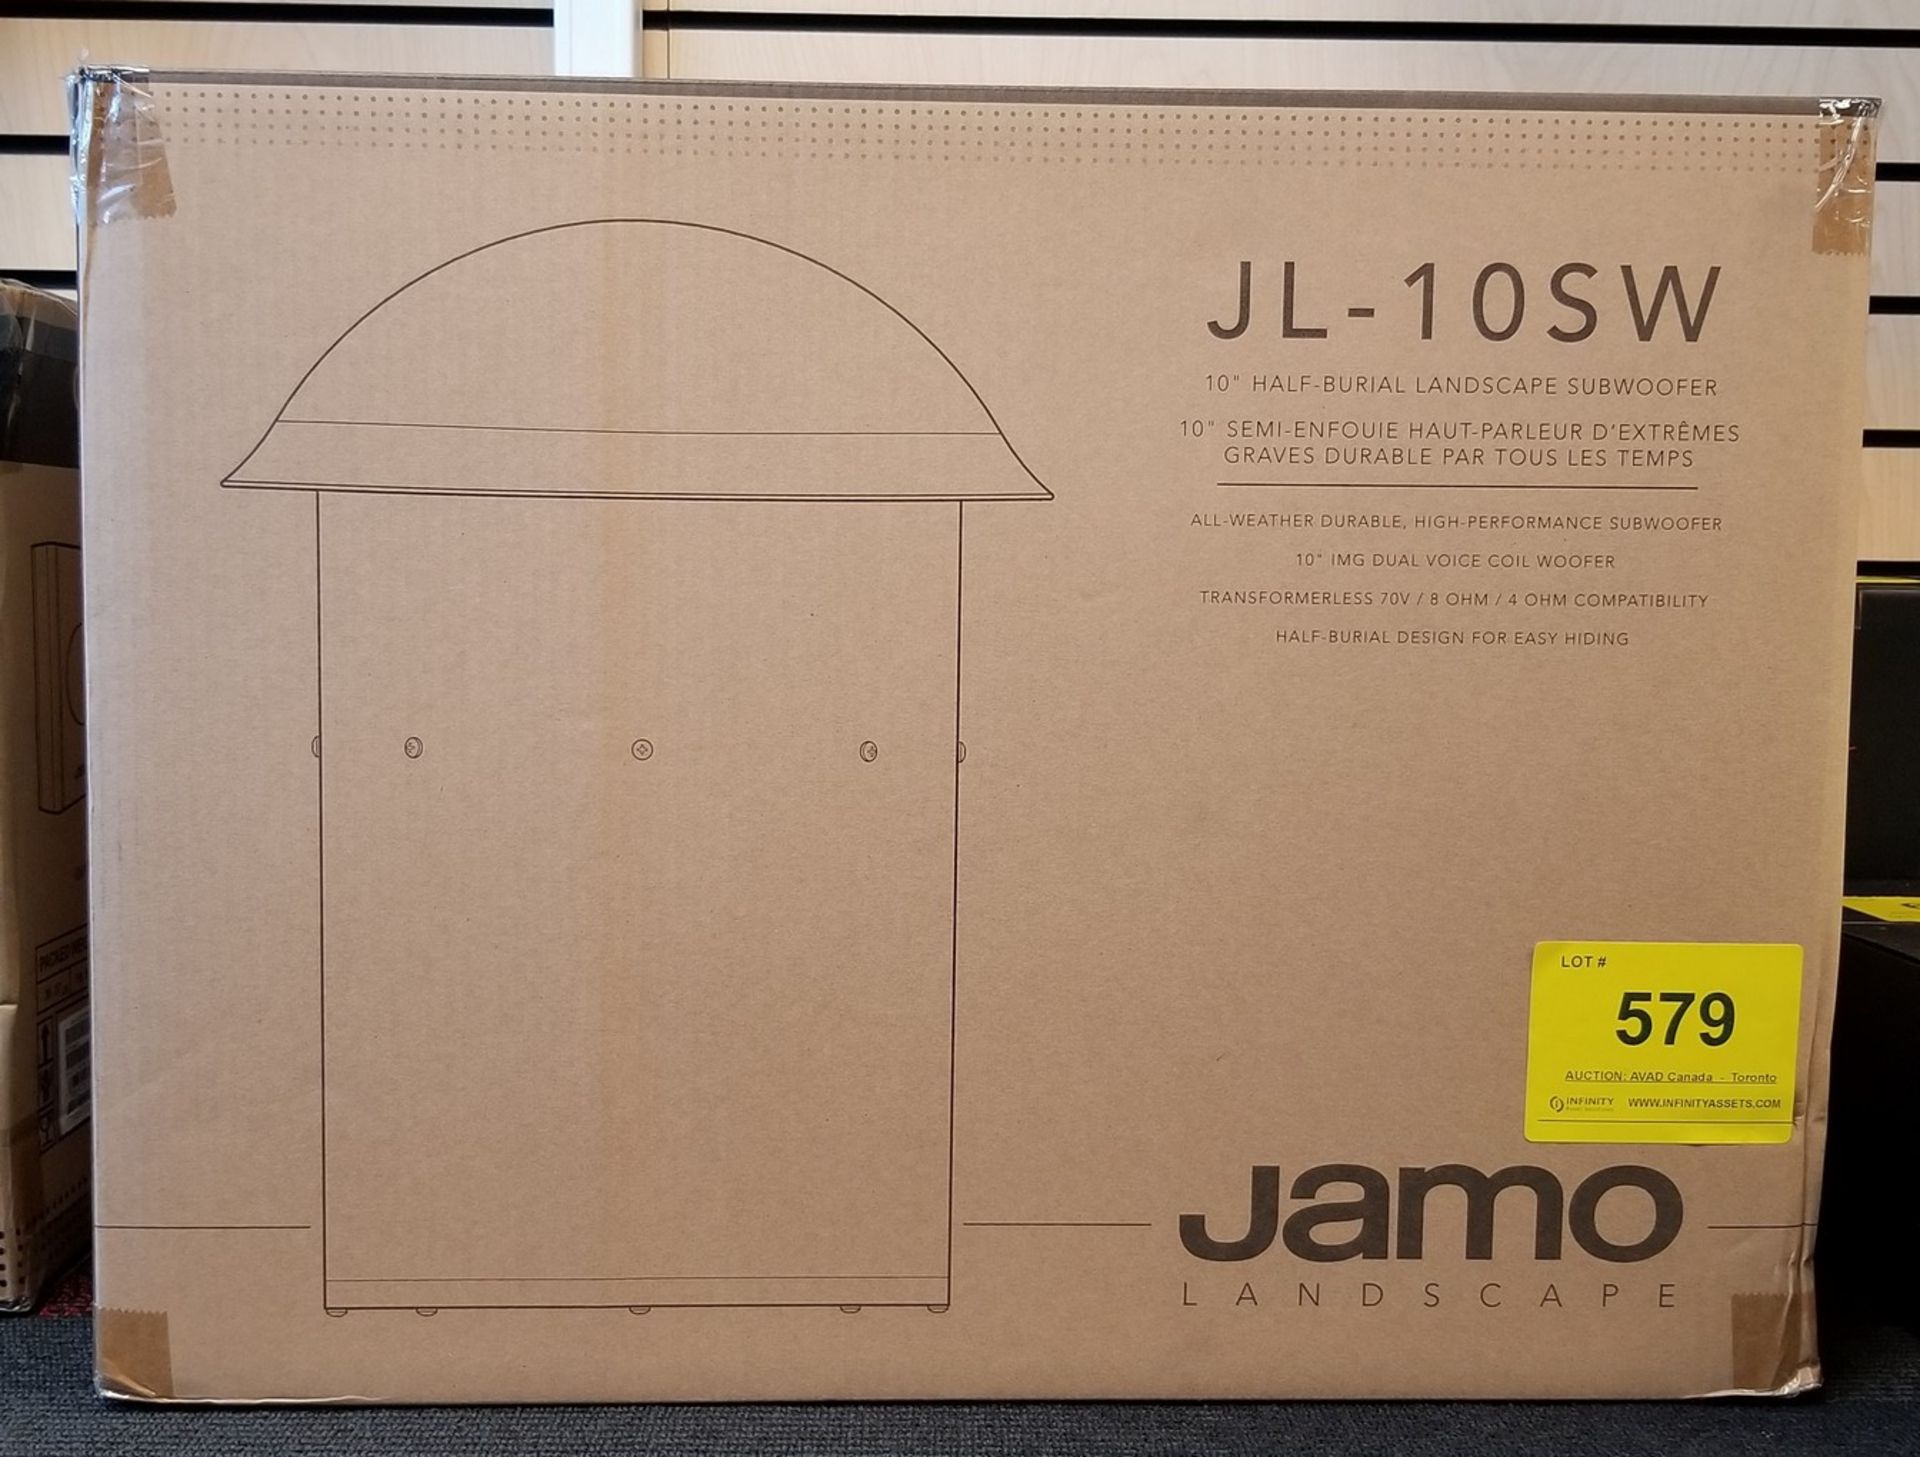 JAMO, JL-10SW 10" BURIAL LANDSCAPE SUBWOOFER - (NOB) COST $319